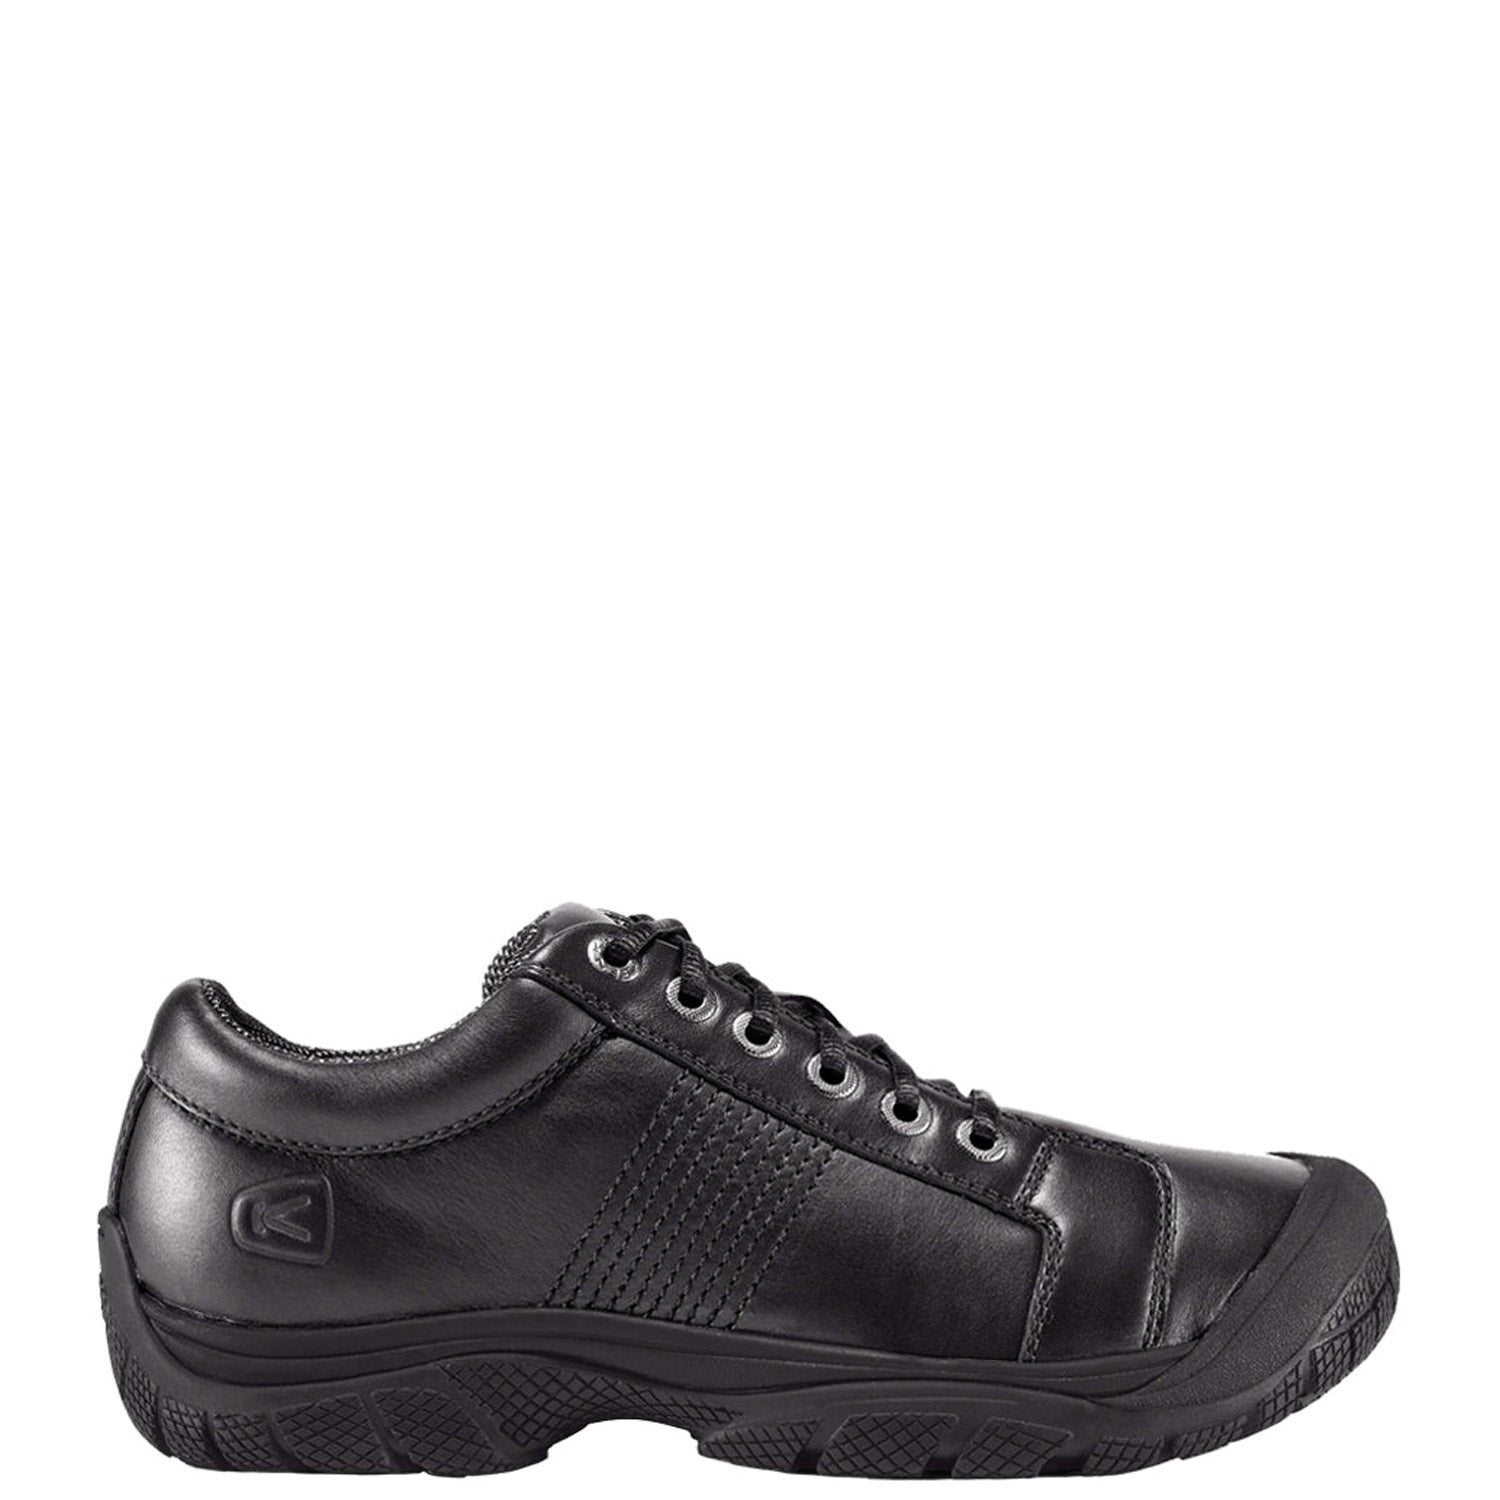 KEEN Utility Men's PTC Oxford Soft Toe Work Shoe - Work World - Workwear, Work Boots, Safety Gear